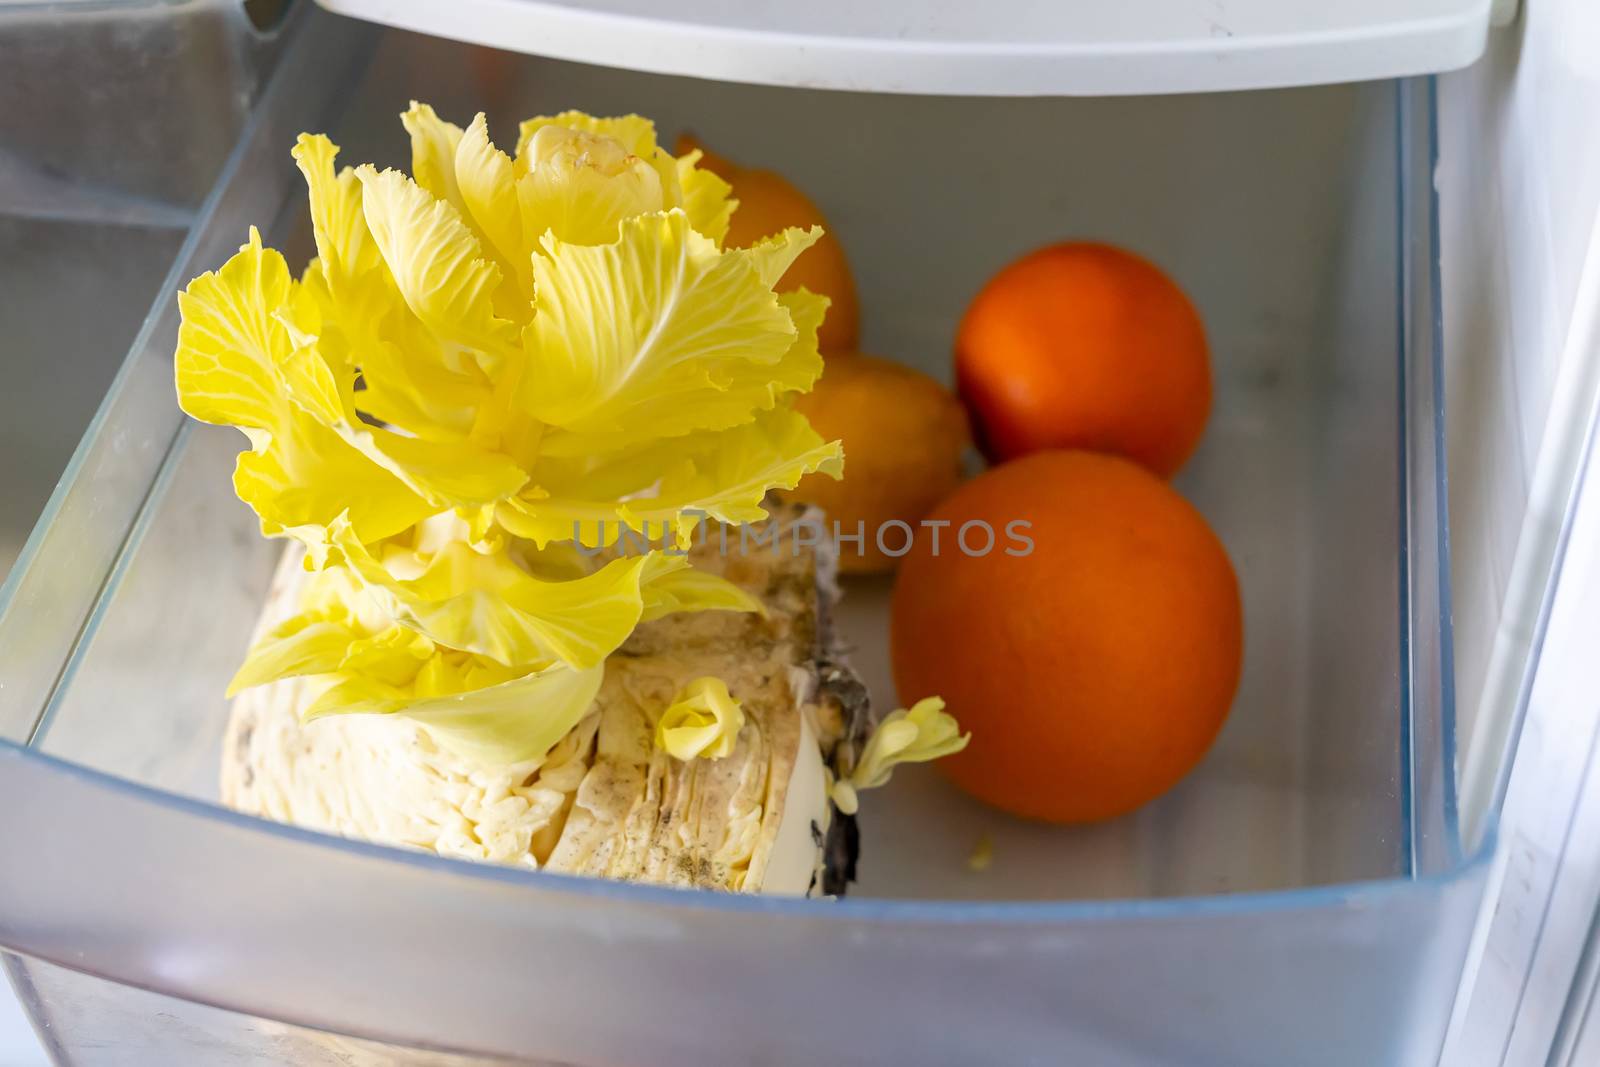 lemons, oranges and cabbage went bad in the fridge by Serhii_Voroshchuk